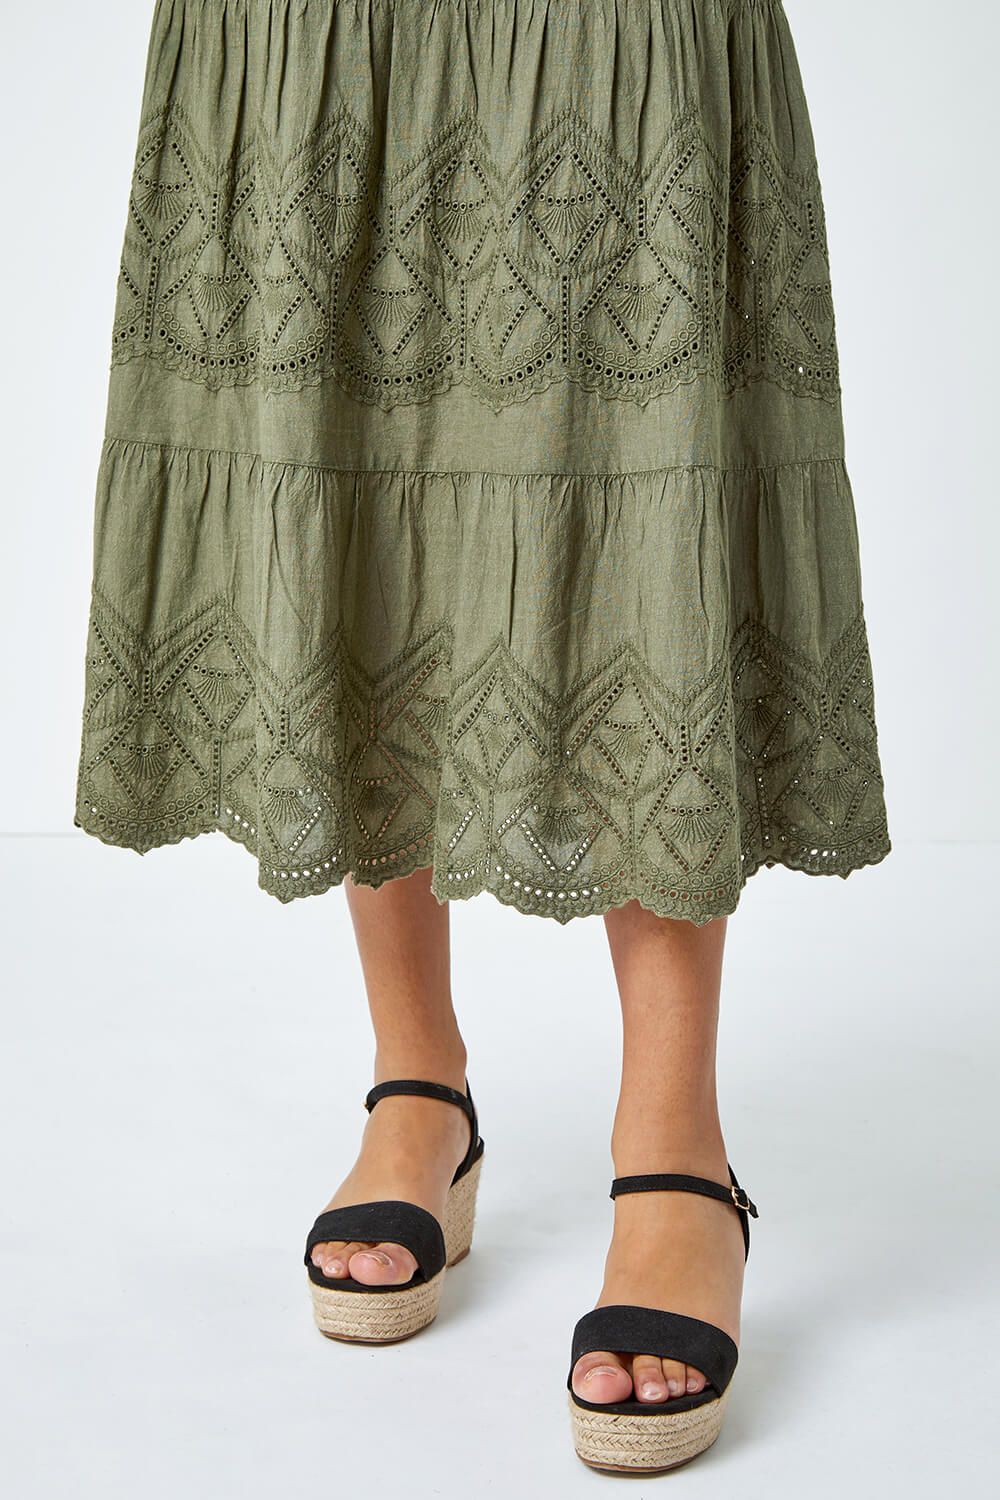 KHAKI Broderie Elastic Waist A Line Tiered Midi Skirt, Image 5 of 5